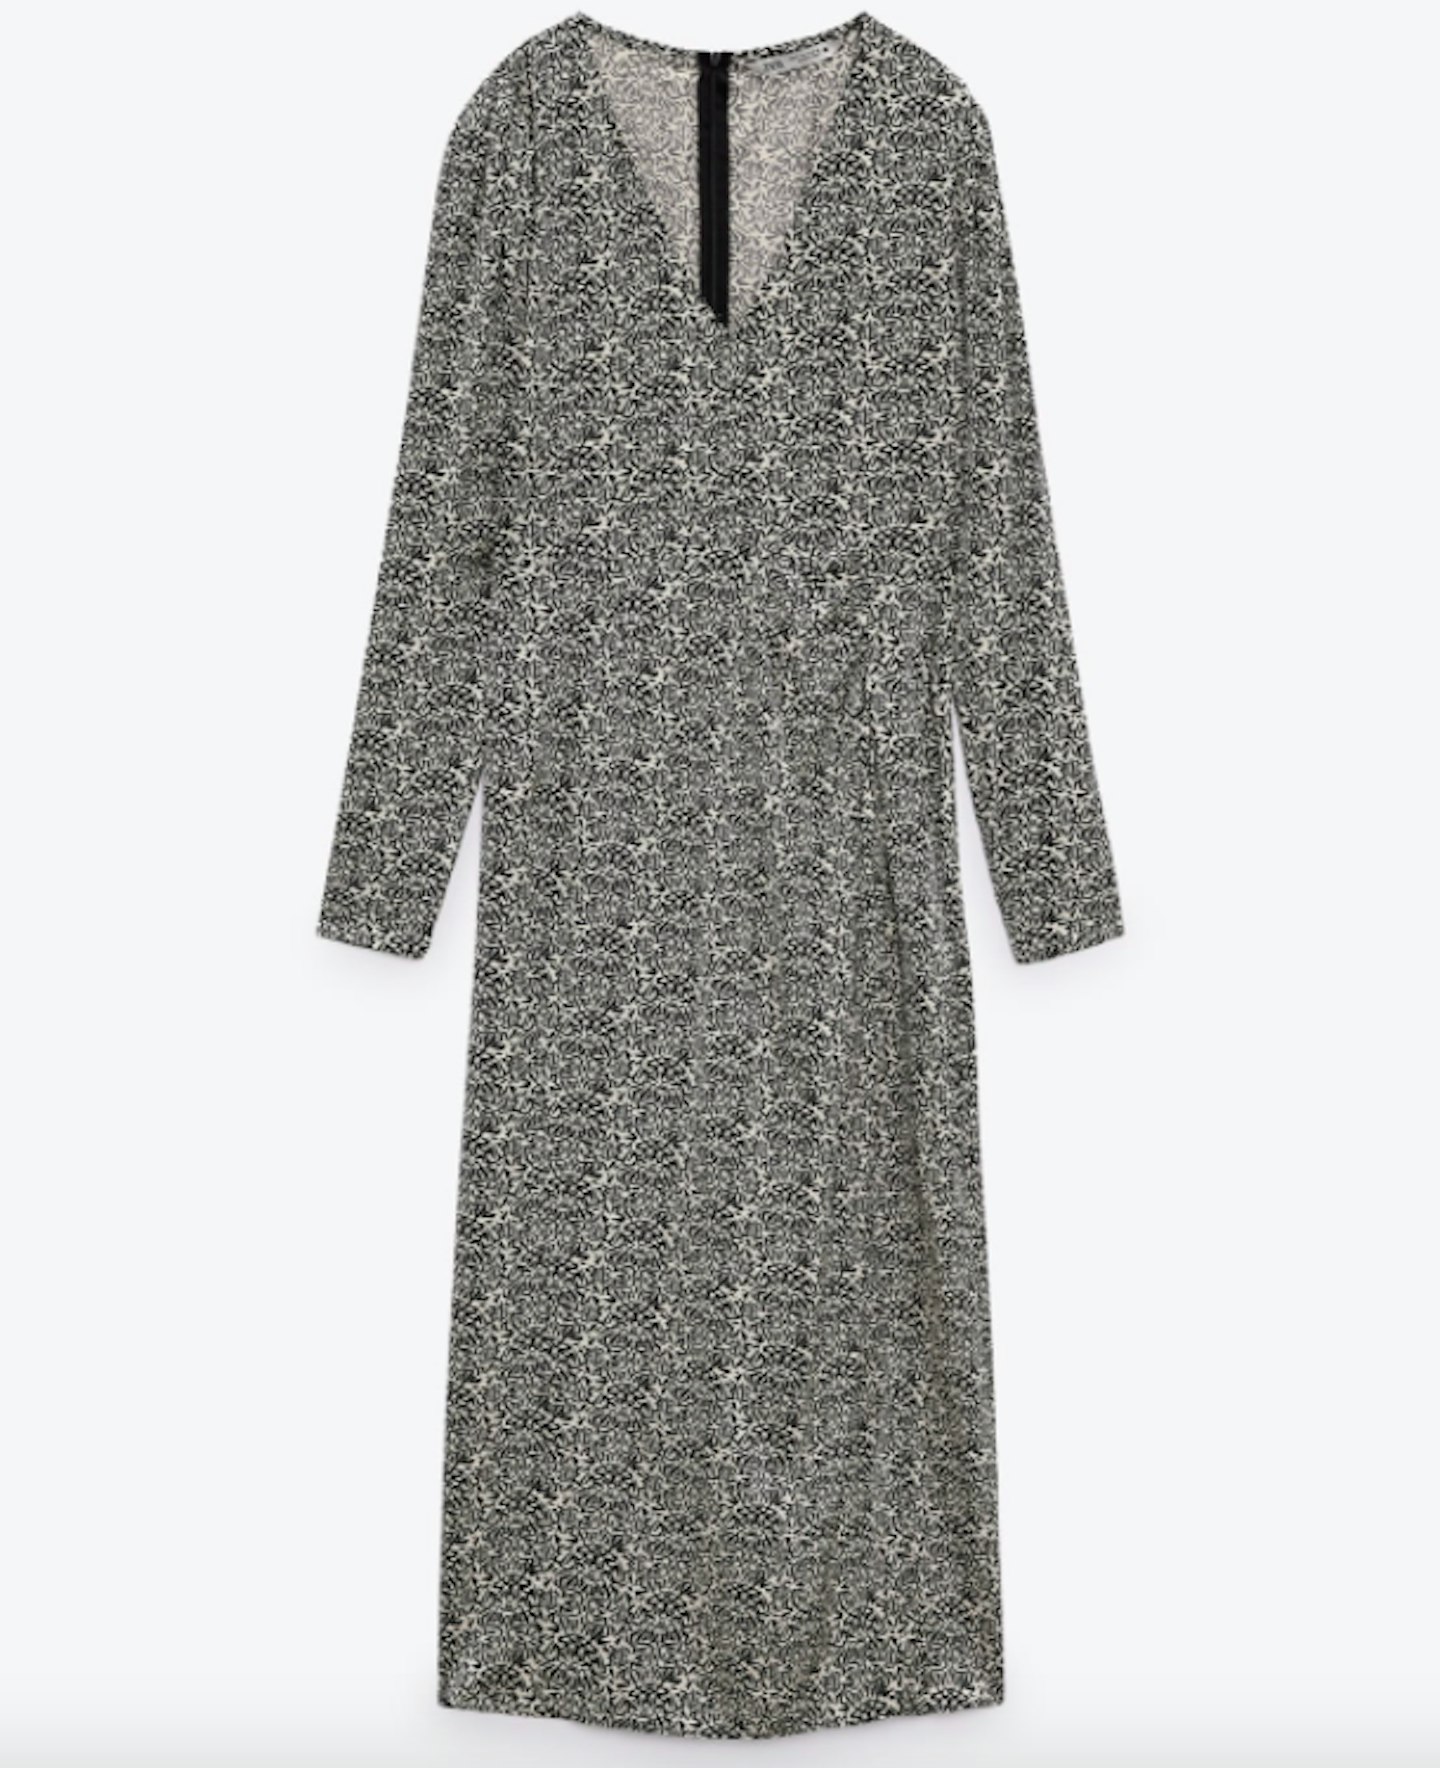 Zara, Printed Midi Dress, £49.99